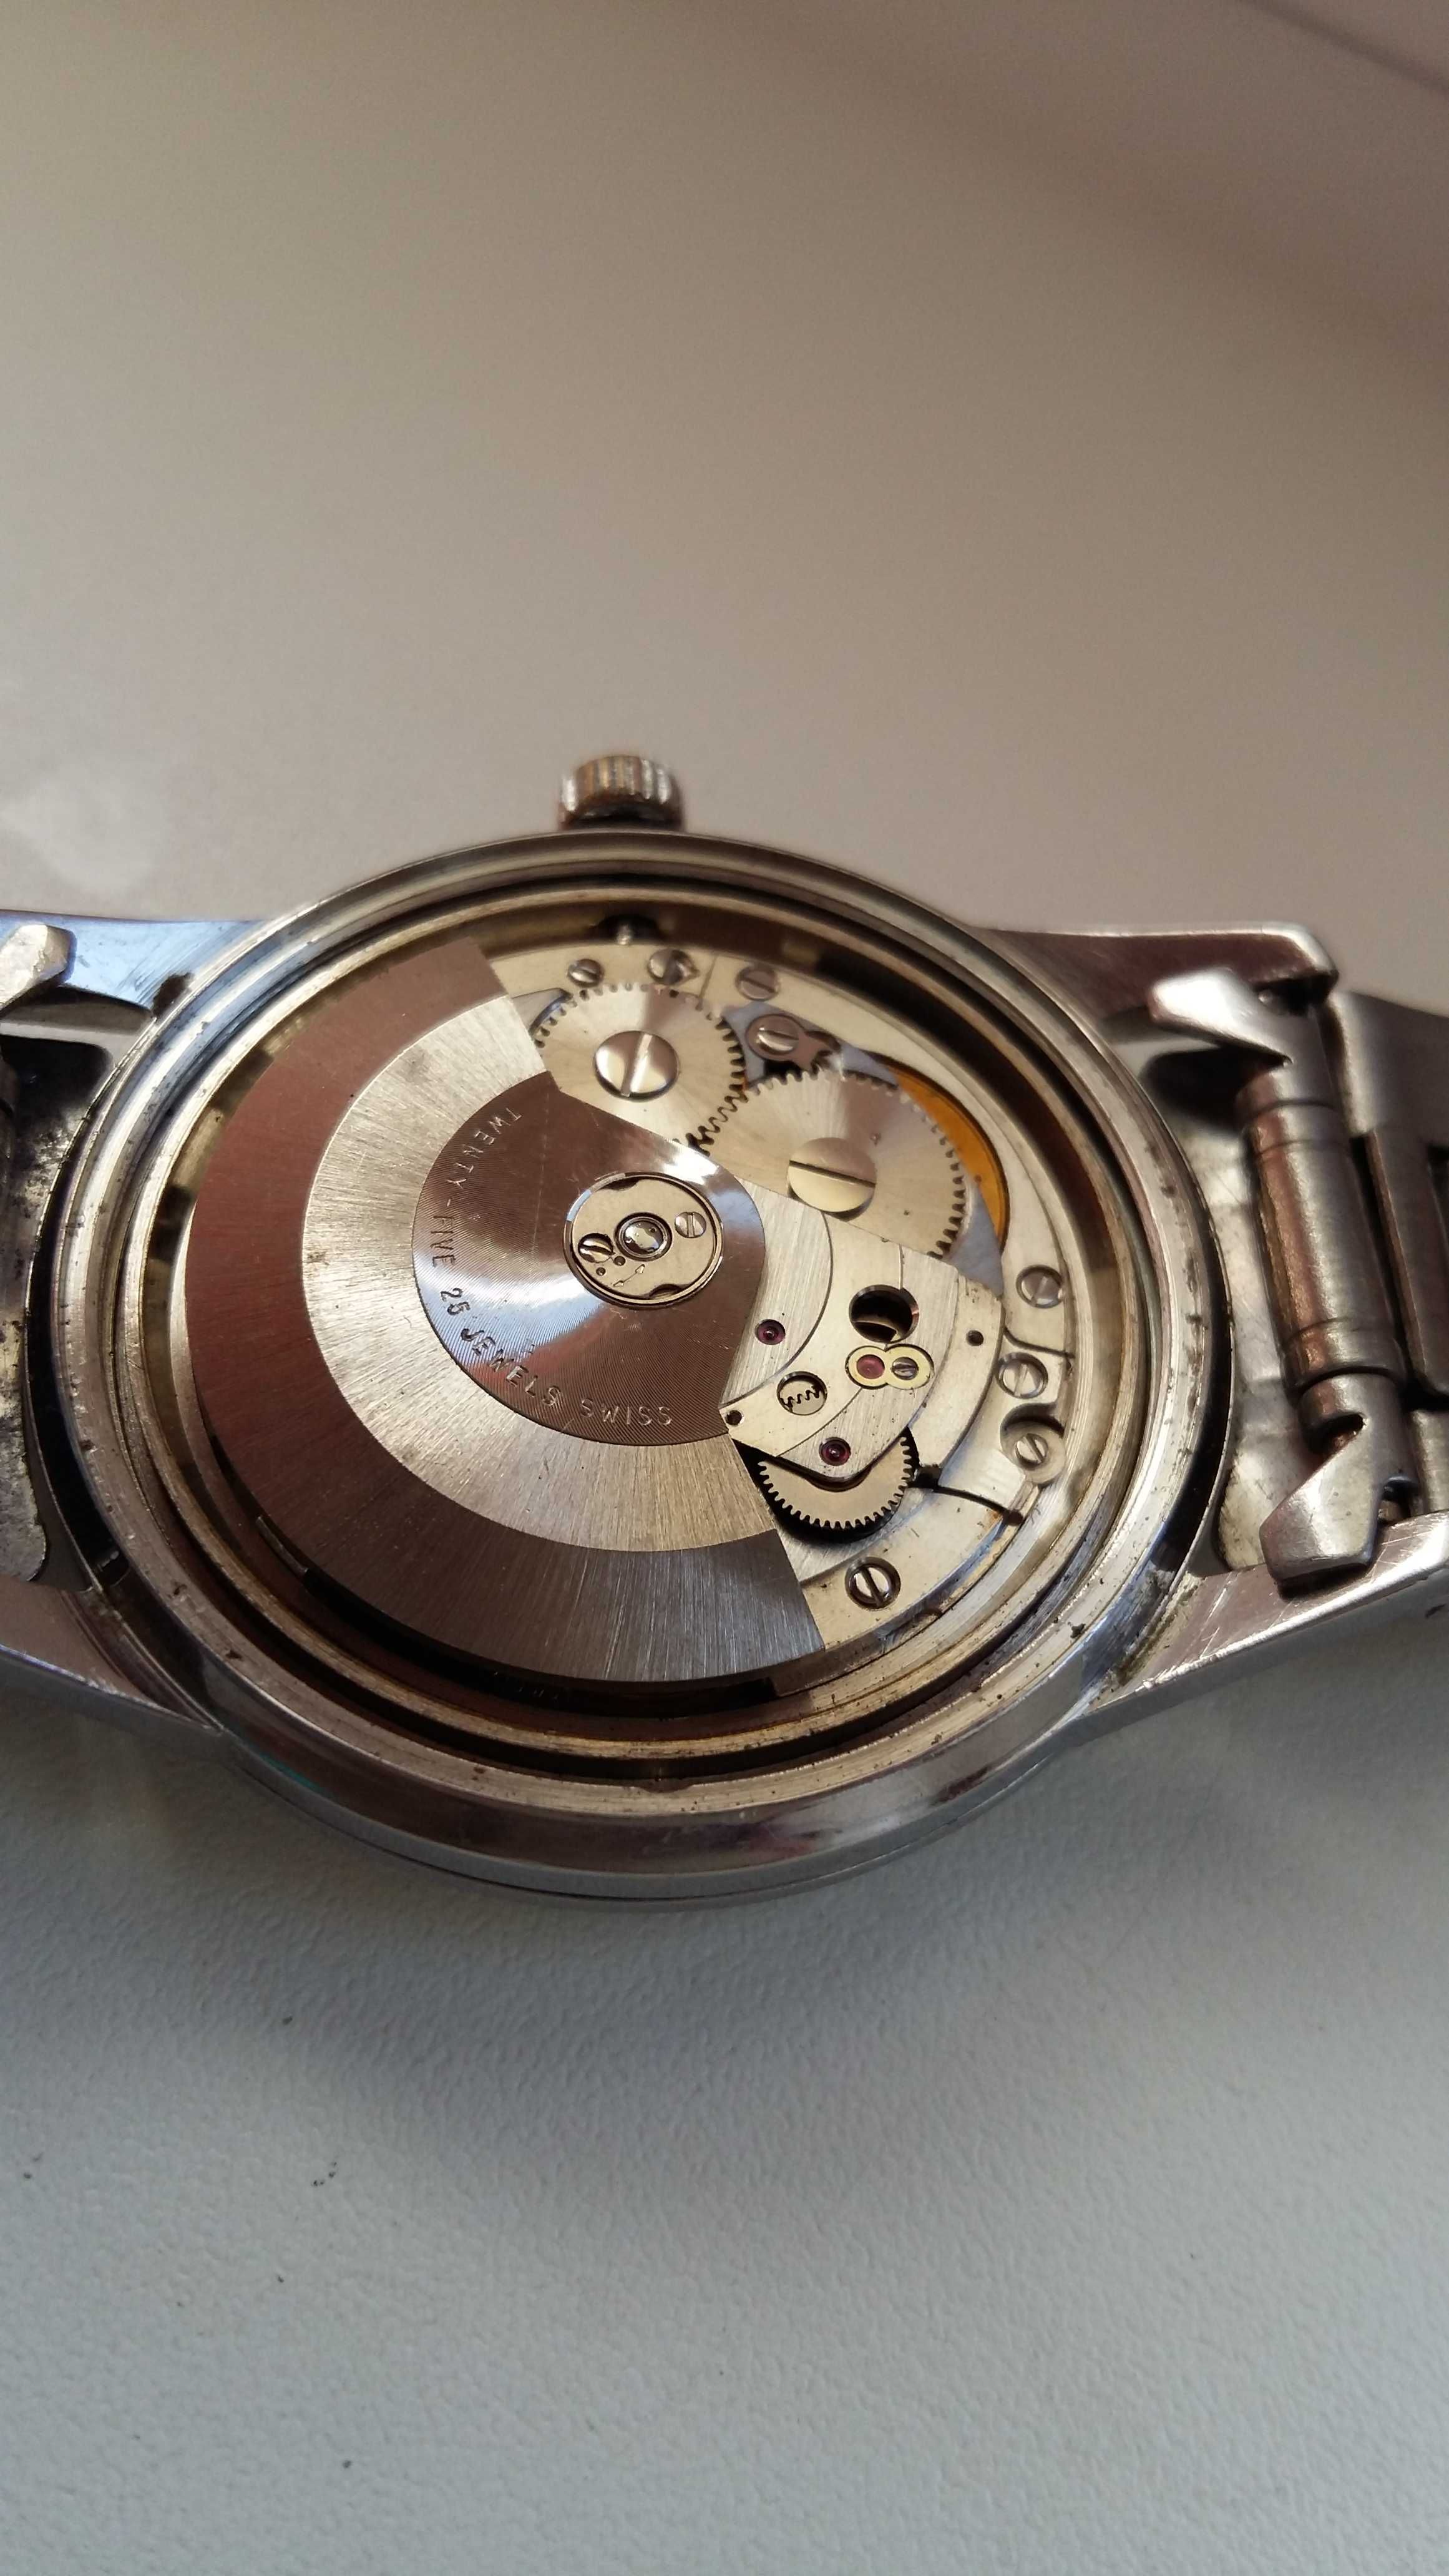 Zegarek AERO-MATIC Watch Swiss 25 jewels stal nie srebro.